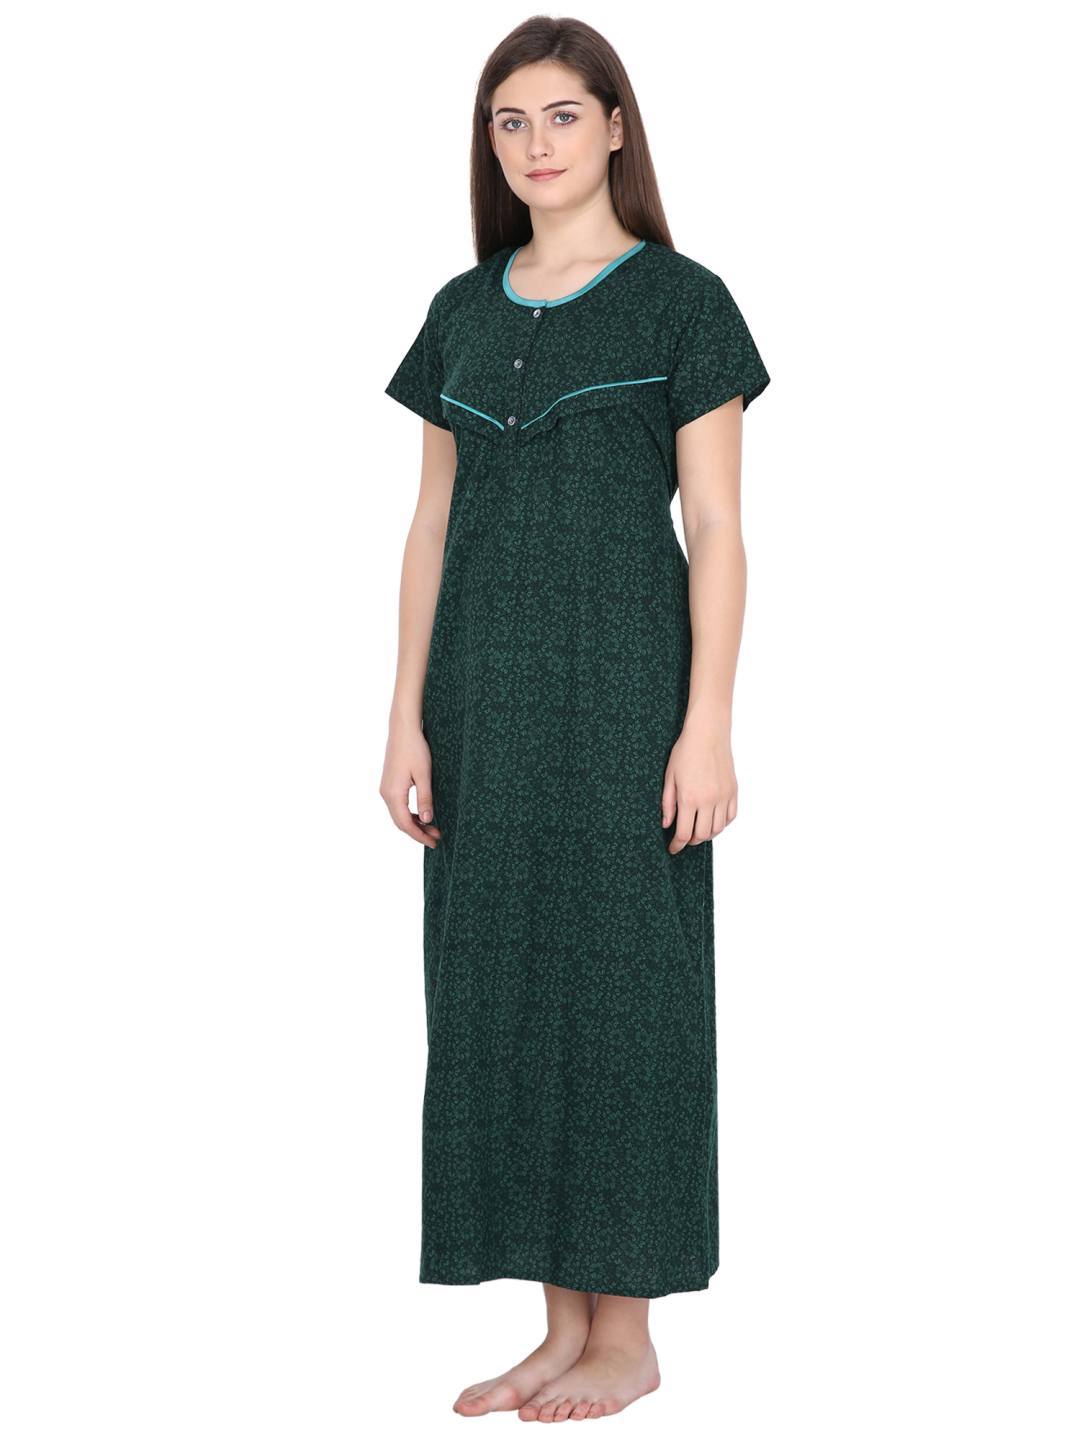 Buy Feeding Dress For Moms - Budget-Friendly And Stylish | M | L | XL | XXL  - Aarral.in